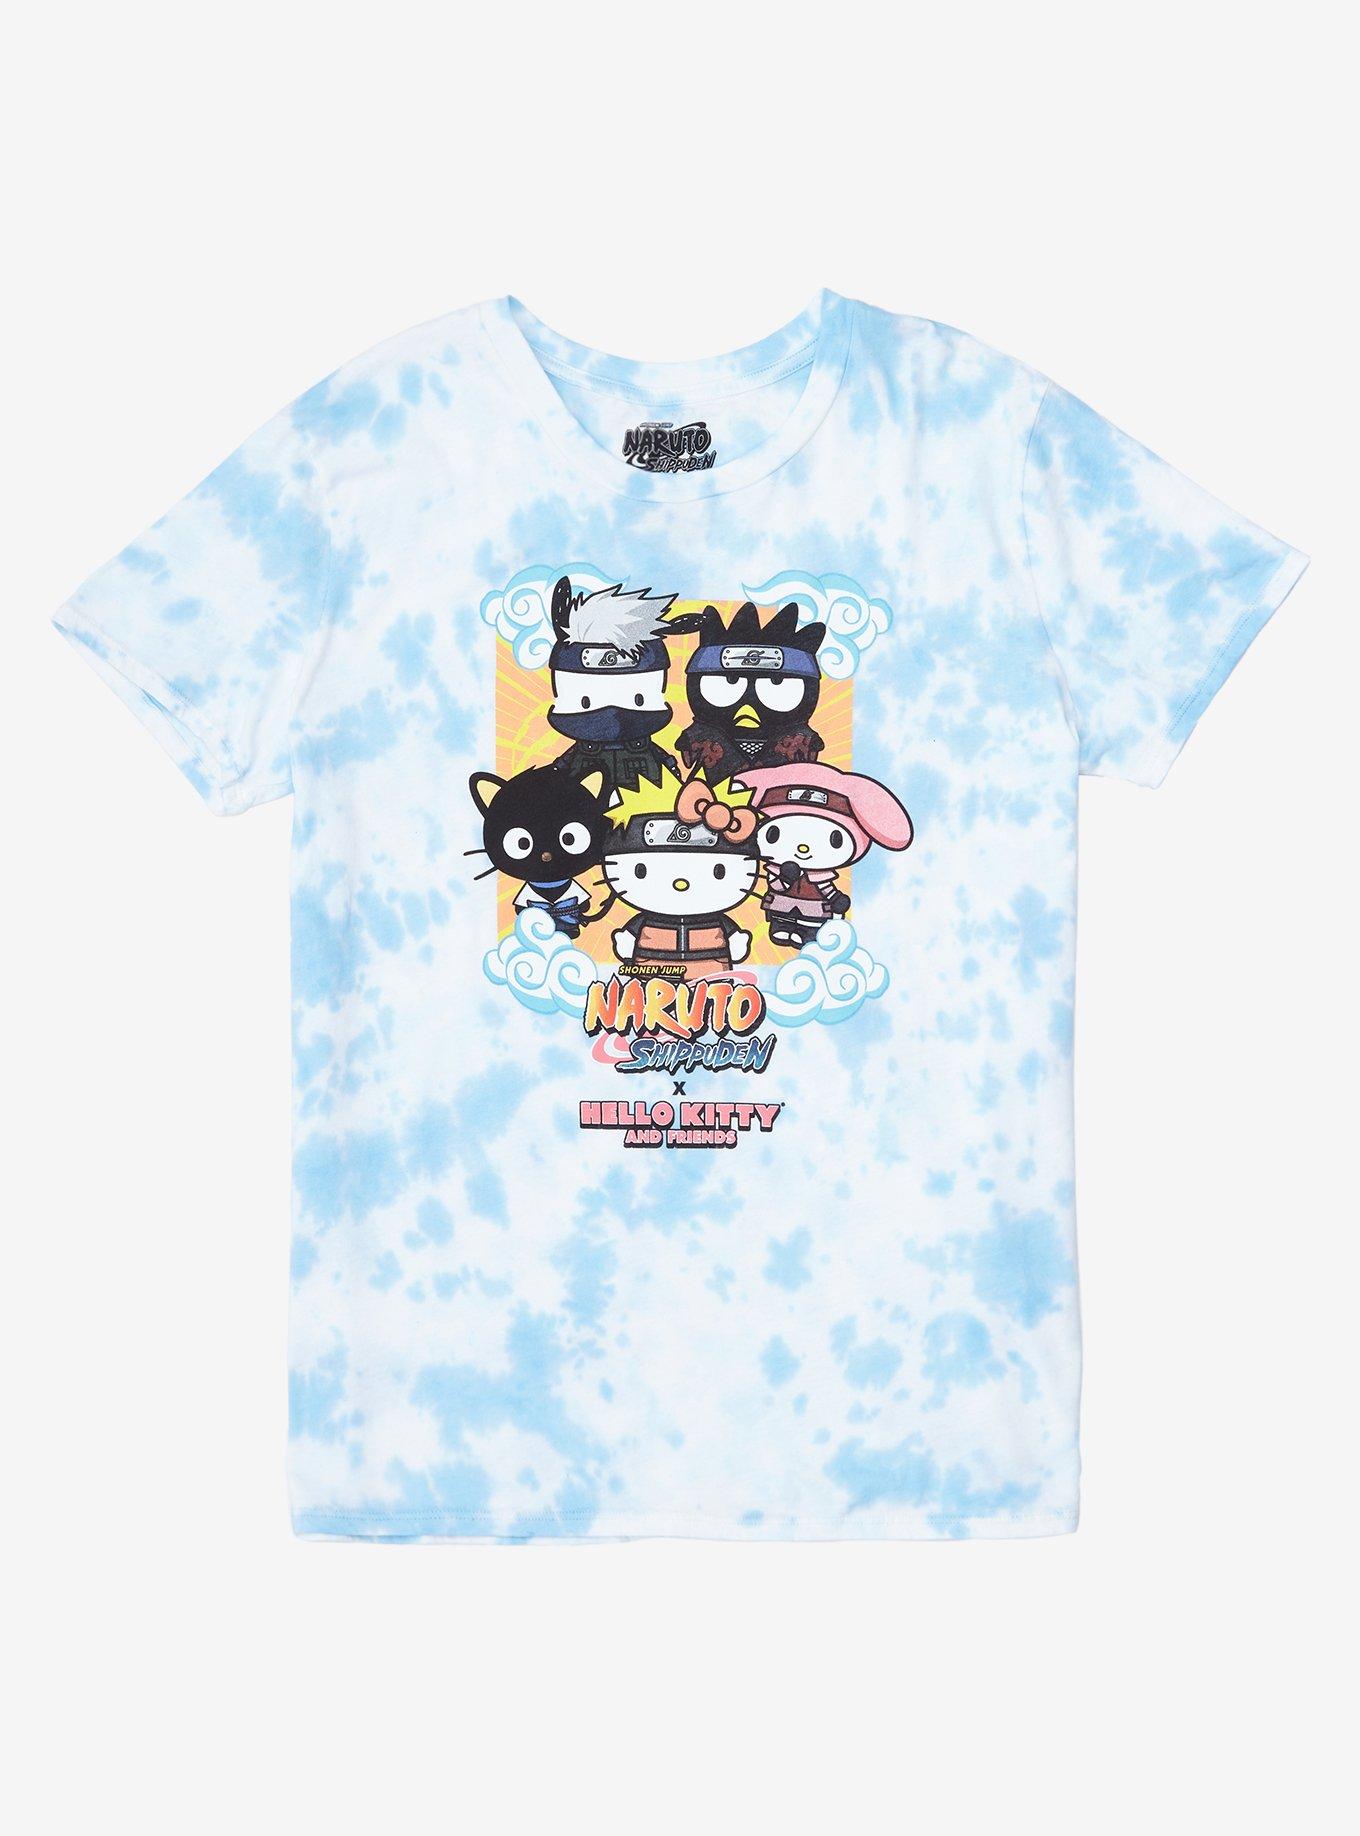 Naruto Shippuden X Hello Kitty And Friends Group Tie-Dye Girls T-Shirt, MULTI, hi-res